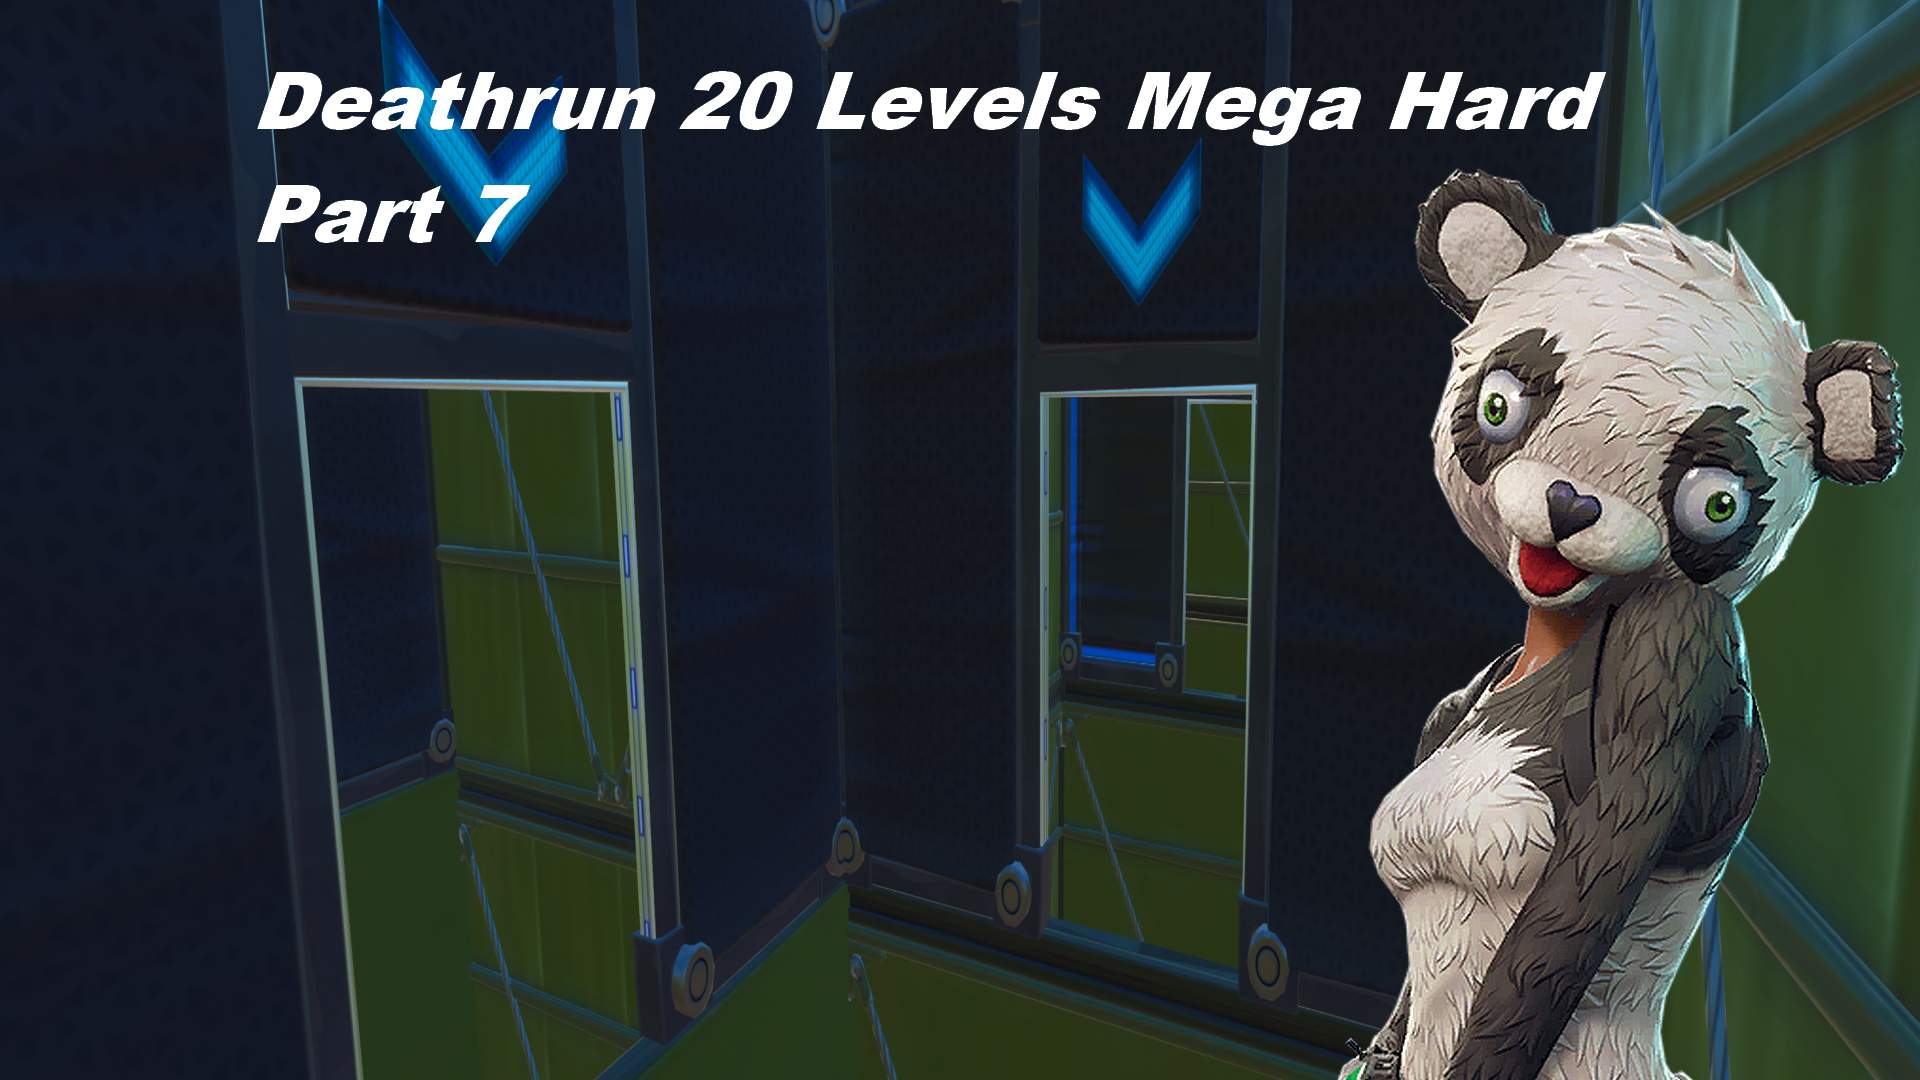 Deathrun 20 levels mega hard part 7